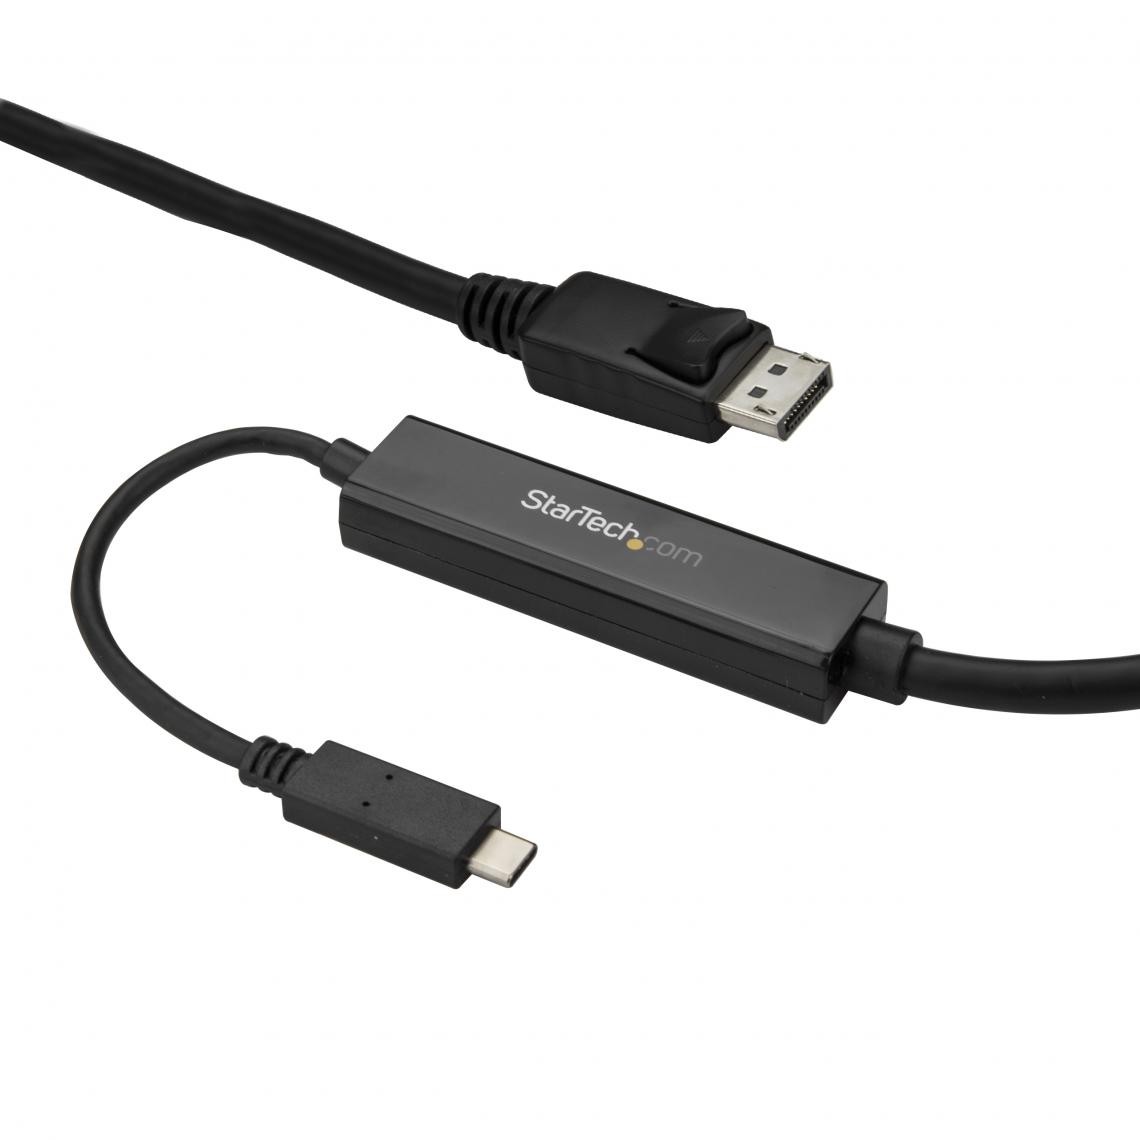 Startech - StarTech.com CDP2DPMM3MB câble vidéo et adaptateur USB Type-C - Hub